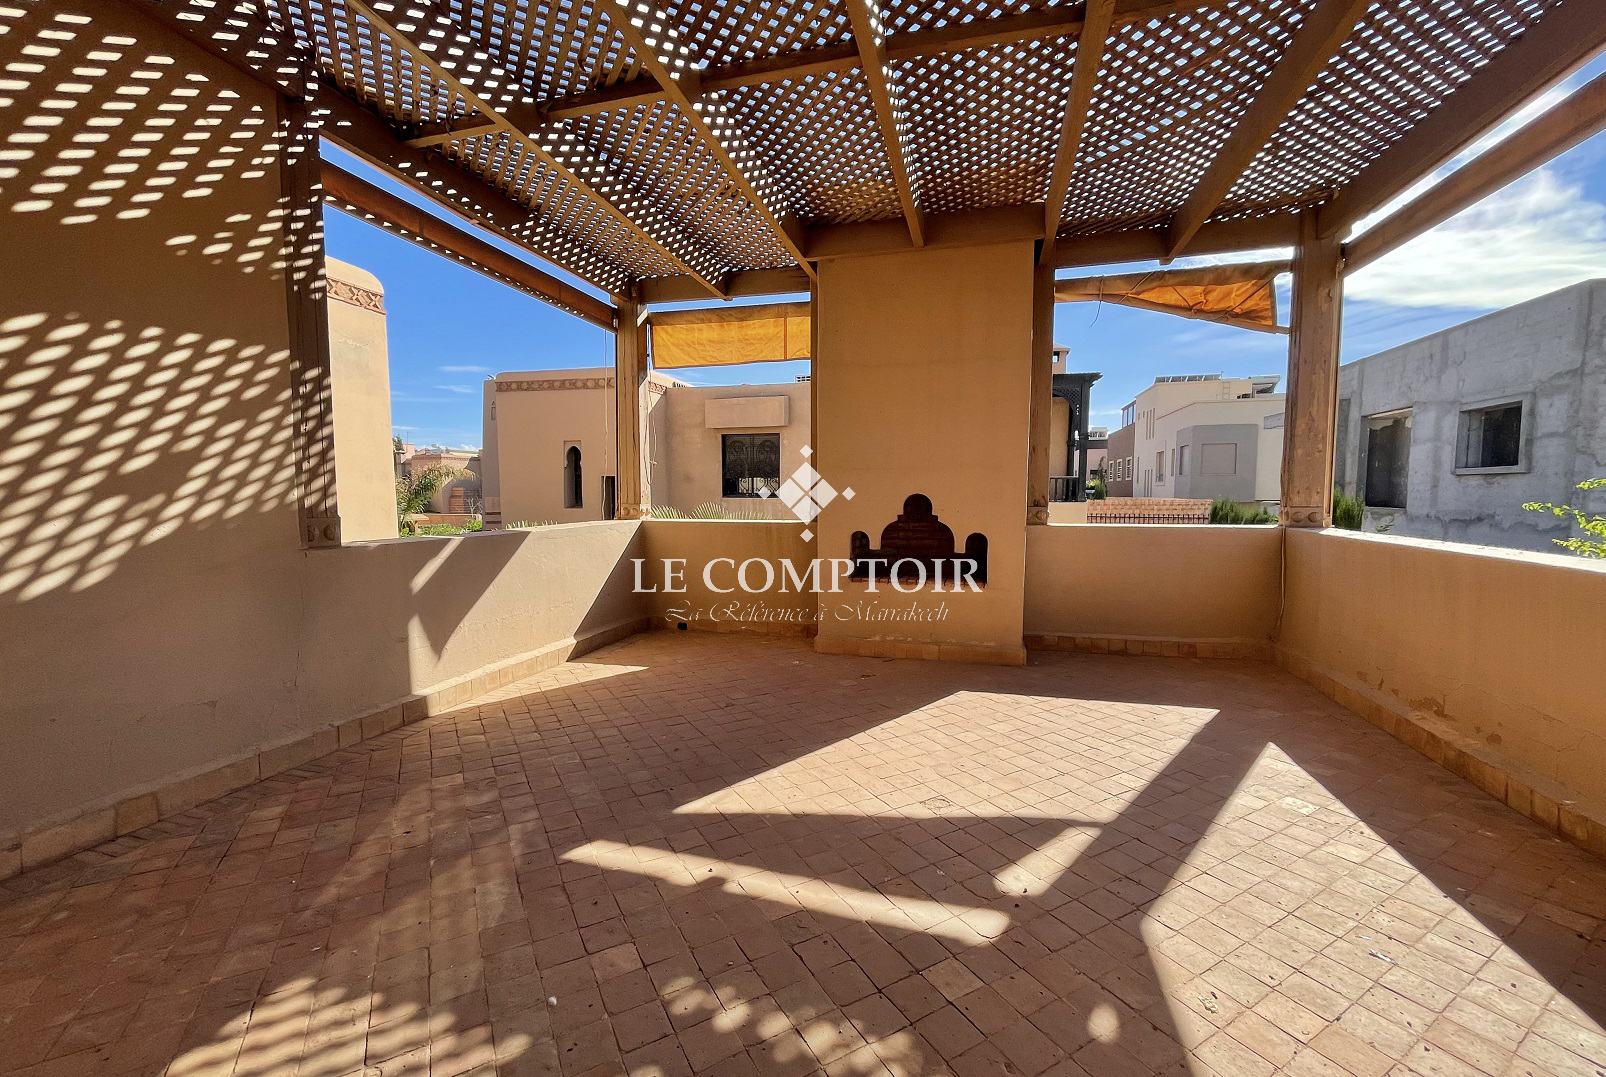 Le Comptoir Immobilier Agence Immobiliere Marrakech Villa Residence Non Meublee Location Marakech Maroc Piscine 14 2